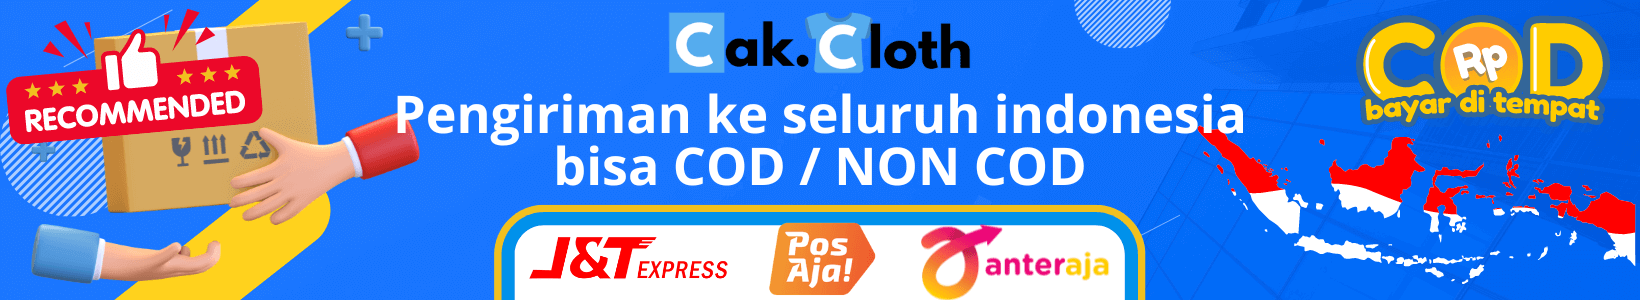 cak cloth melayani pengiriman cod atau non cod keseluruh indonesia